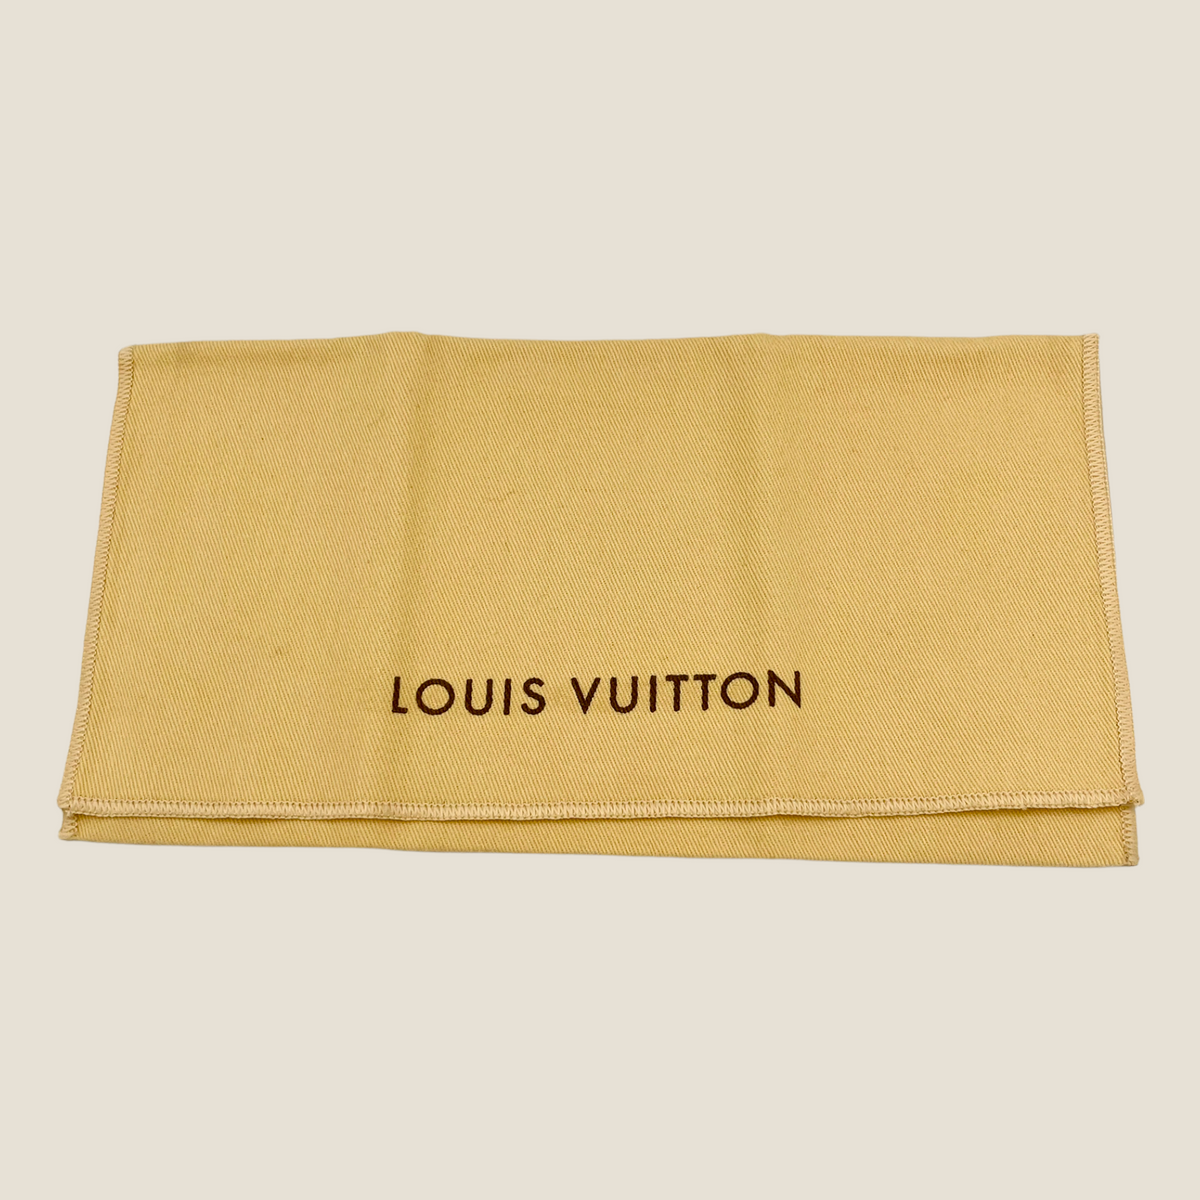 Louis Vuitton Dust Cover Bag 413364/O see description